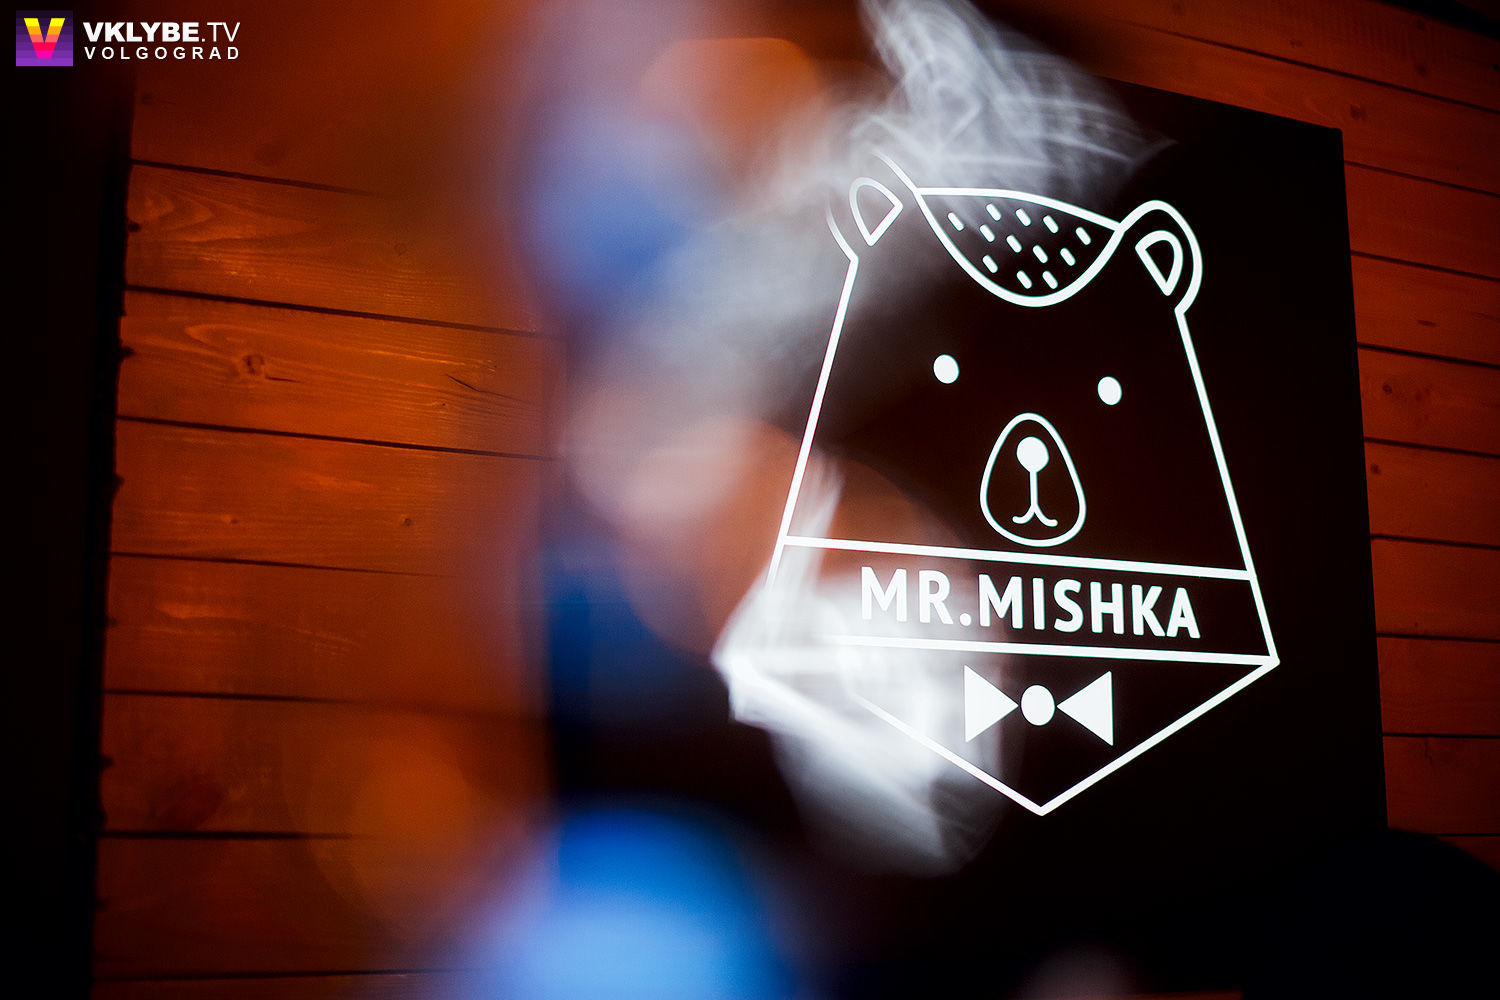 Mr Mishka. Msk_Mishka. Mishka Group LLC. Mr report